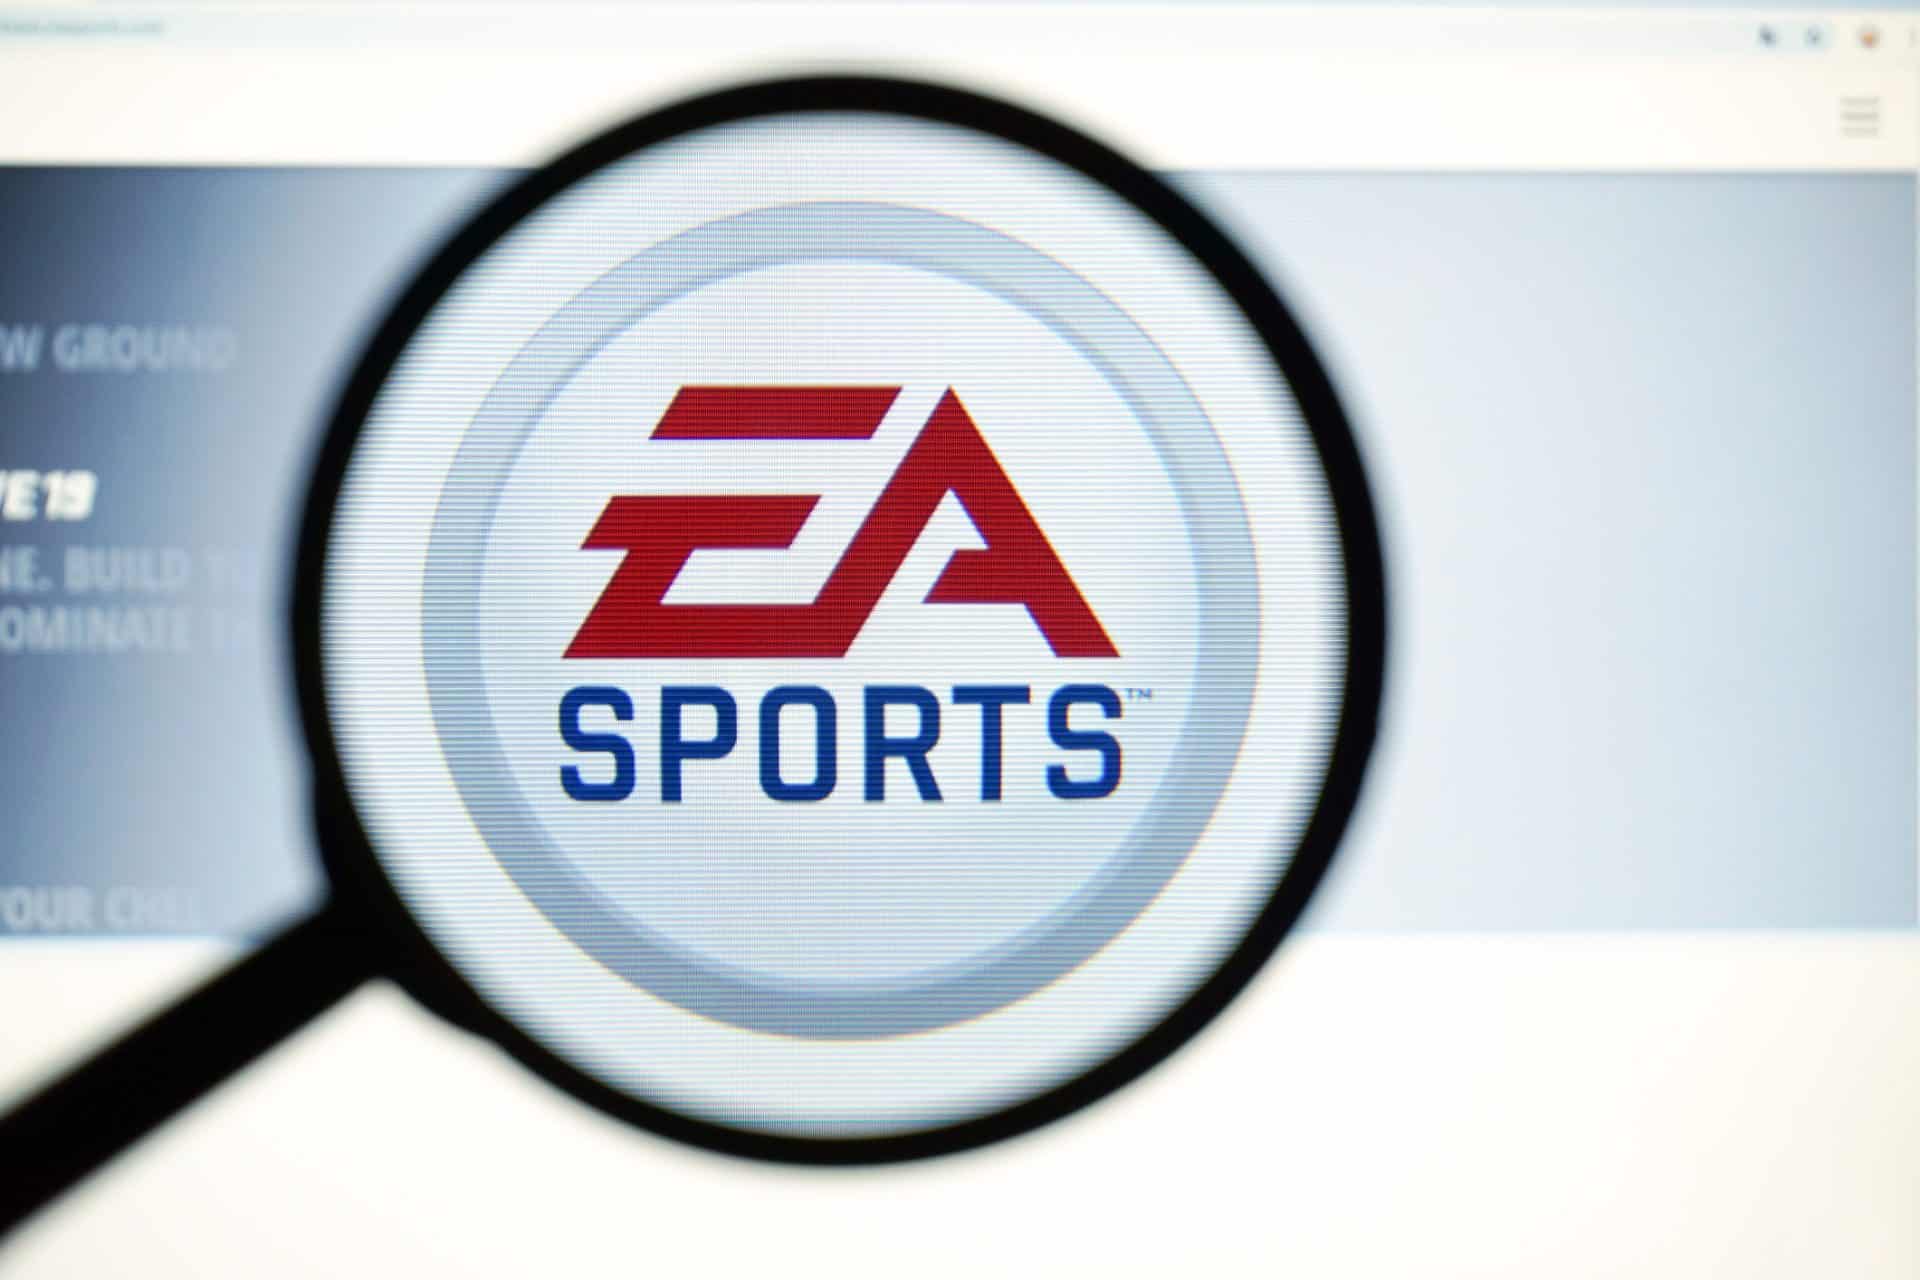 Já sabemos porque a Electronic Arts quer mudar nome do jogo FIFA